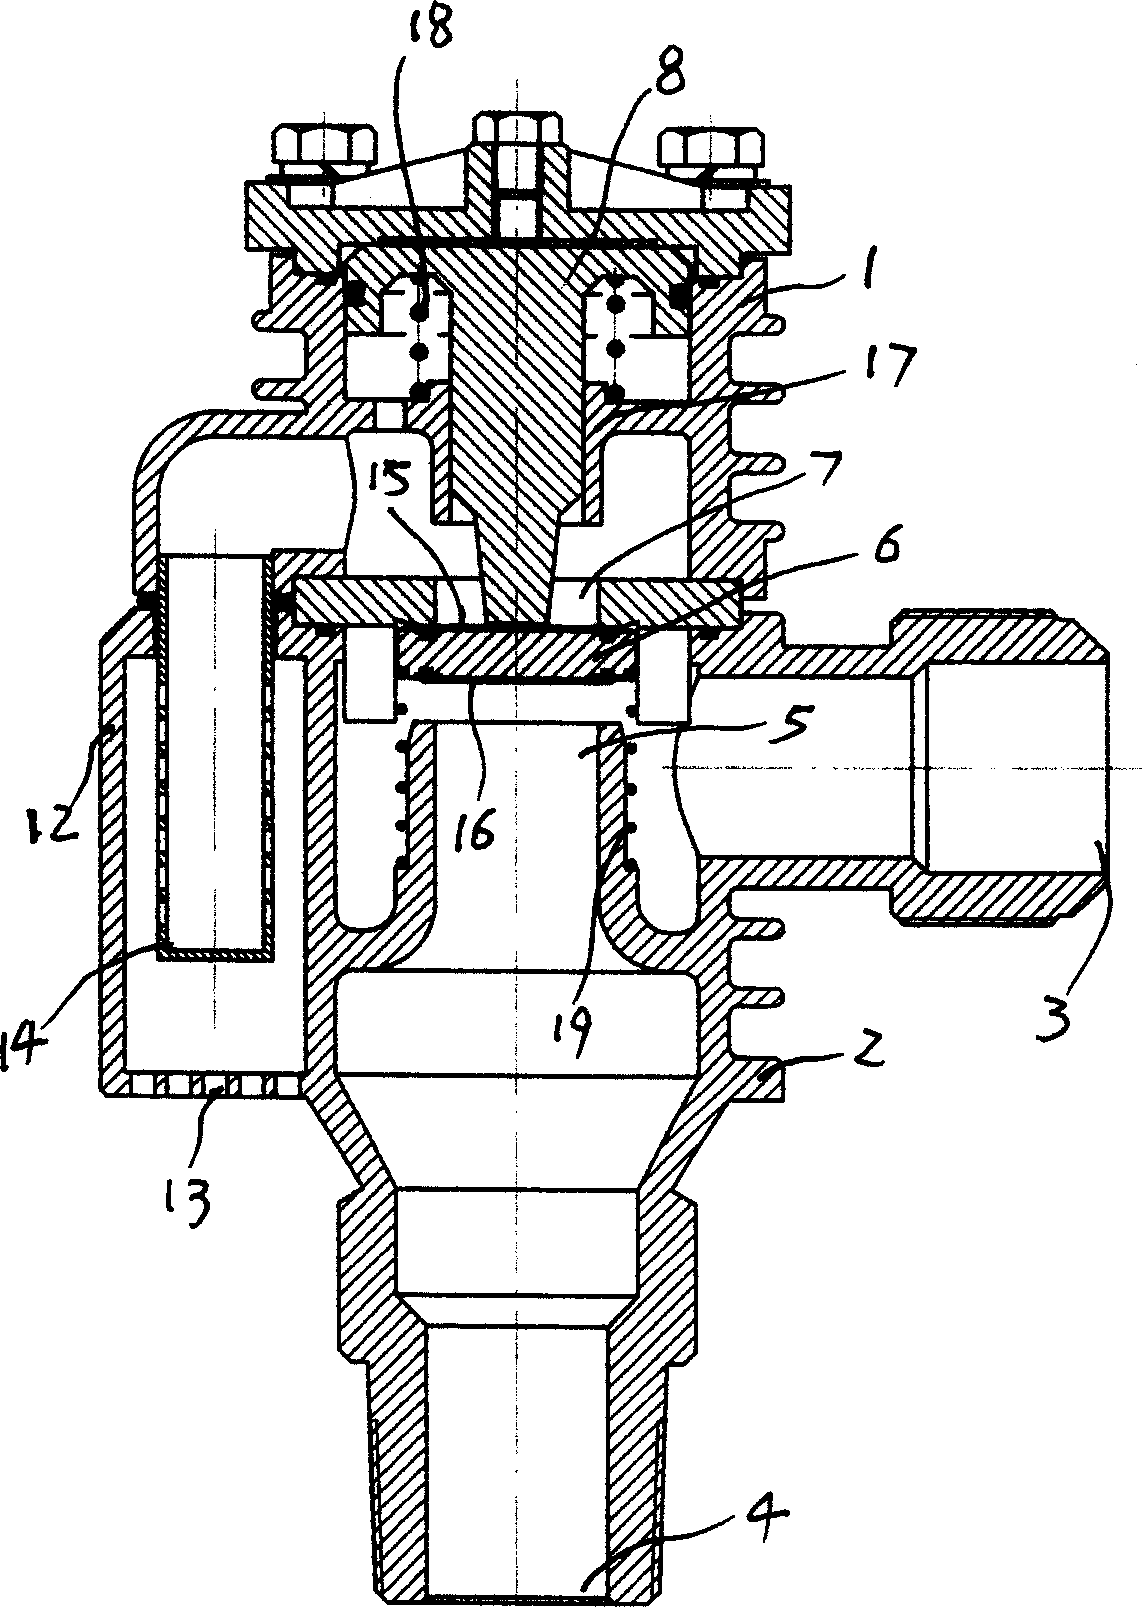 Combined pressure regulating valve